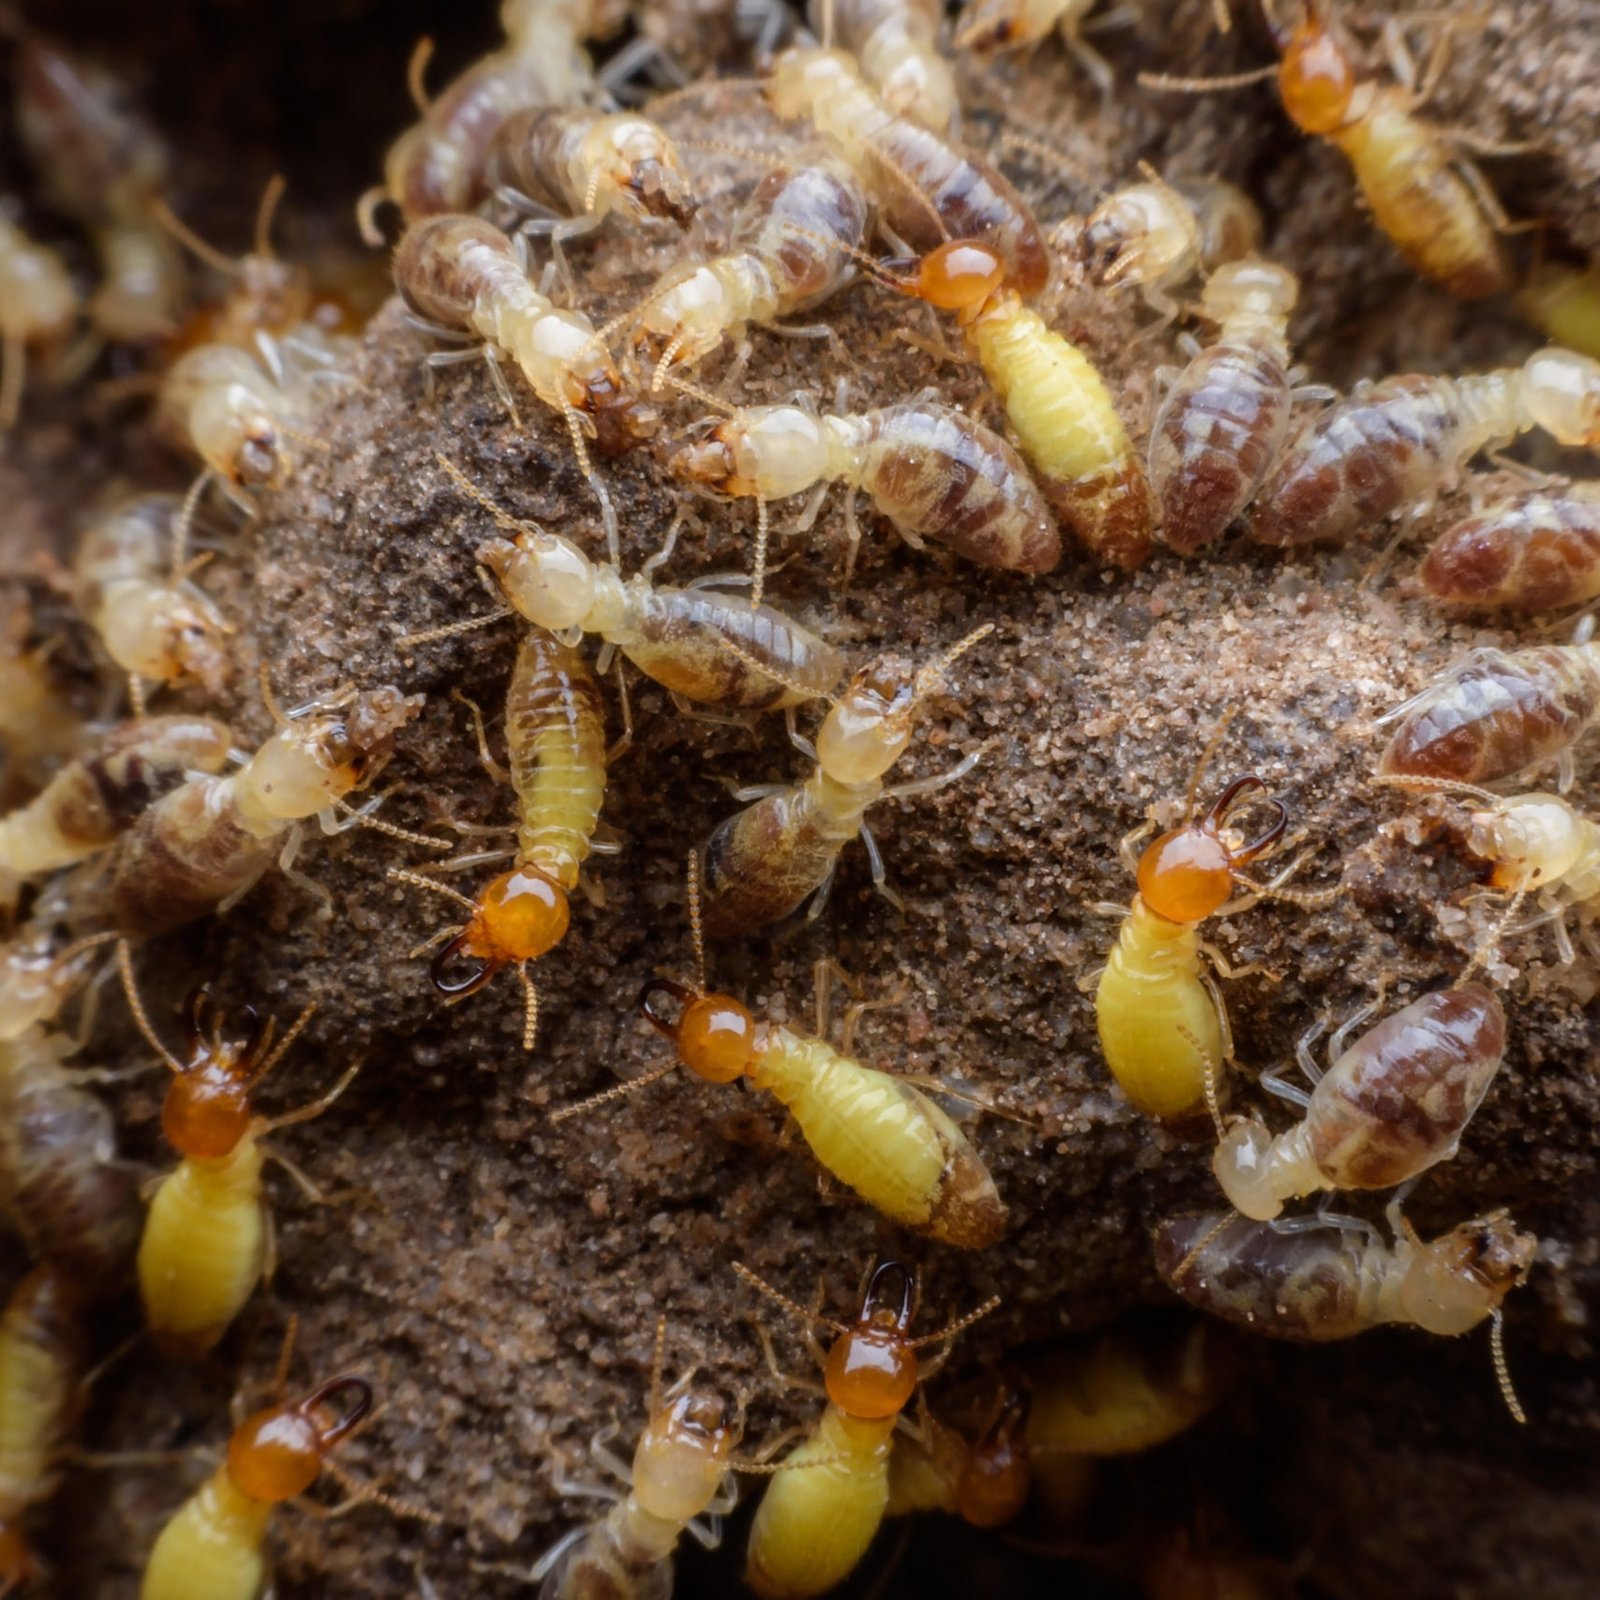 Hordes of termites building their nest